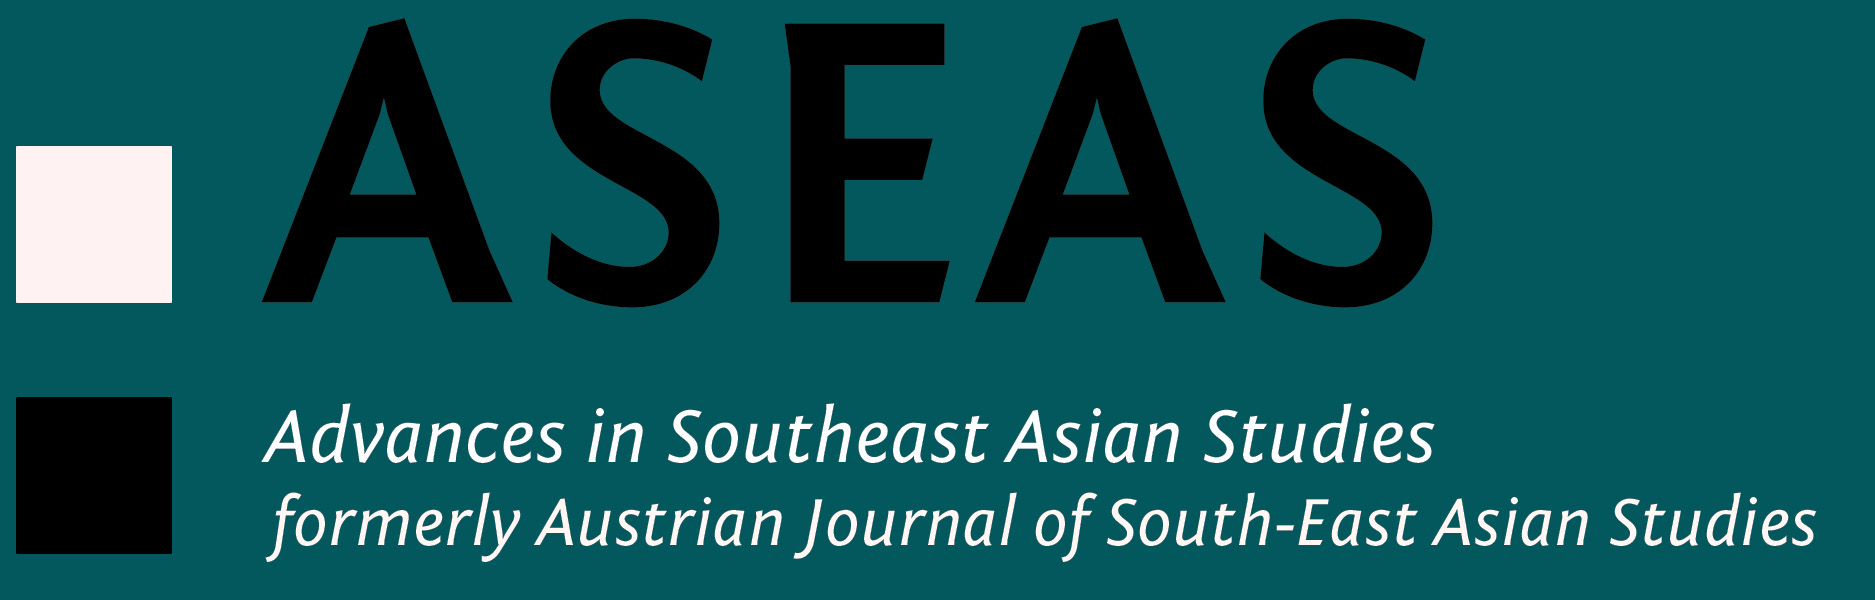 Austrian Journal of South-East Asian Studies